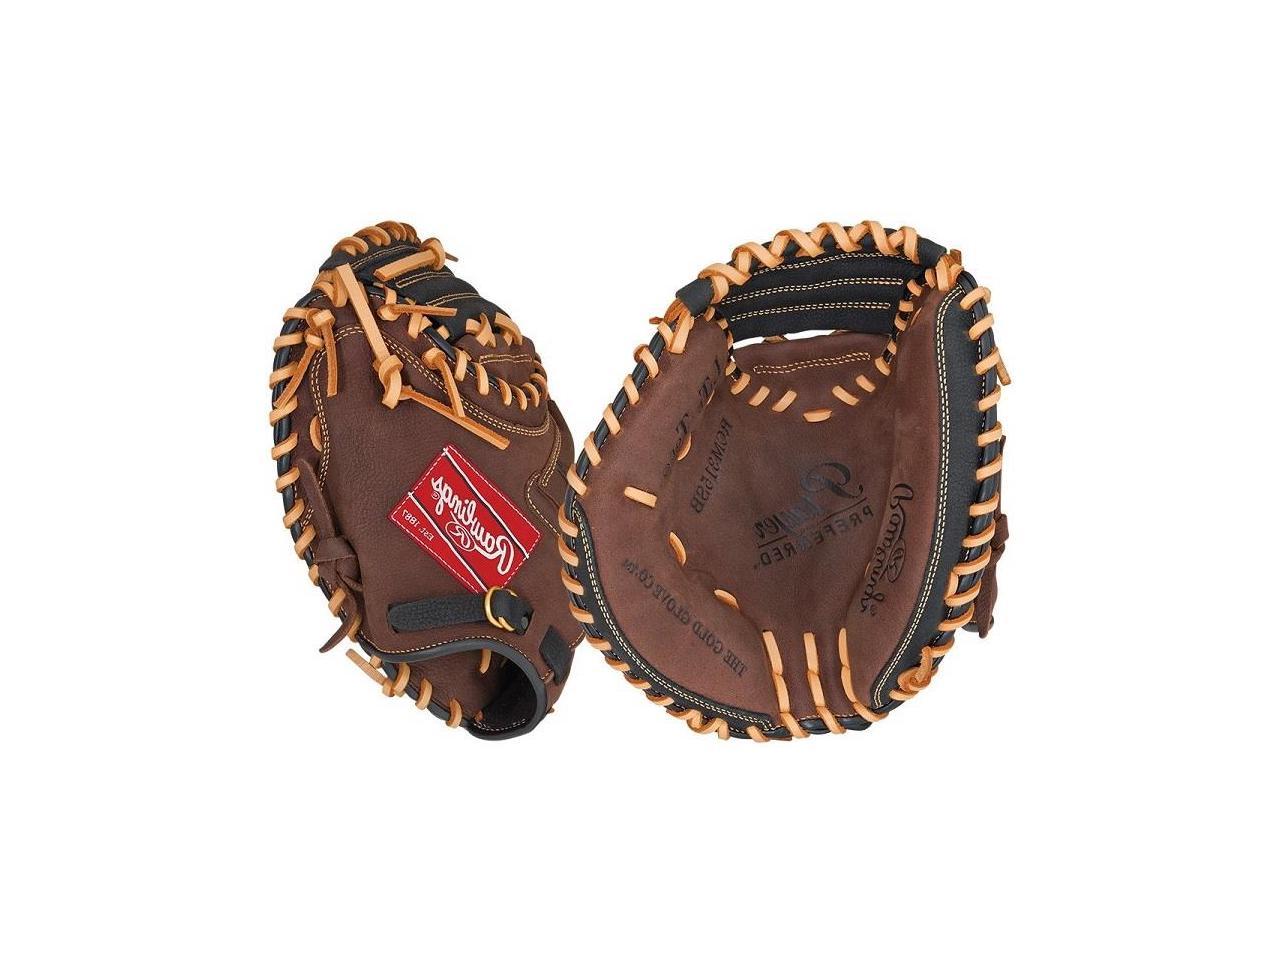 New Other VKM G48 Junior 30" Leather Baseball Catcher's Glove Mitt LHT 